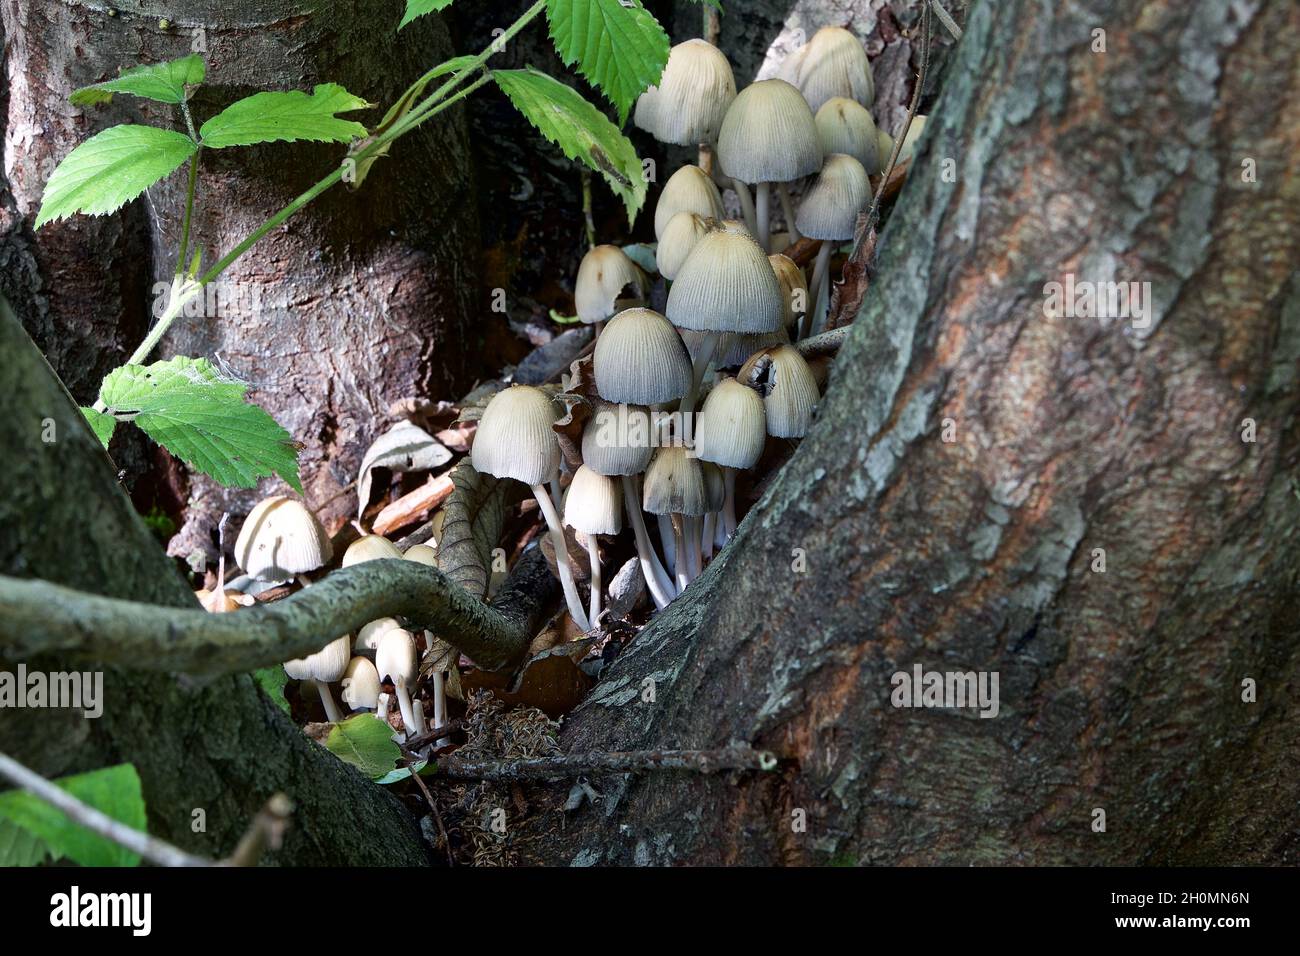 Fungi - Mica cap (Coprinellus) also known as Glistening Inkcap and Shiny cap, Coprinellus micaceus. Stock Photo